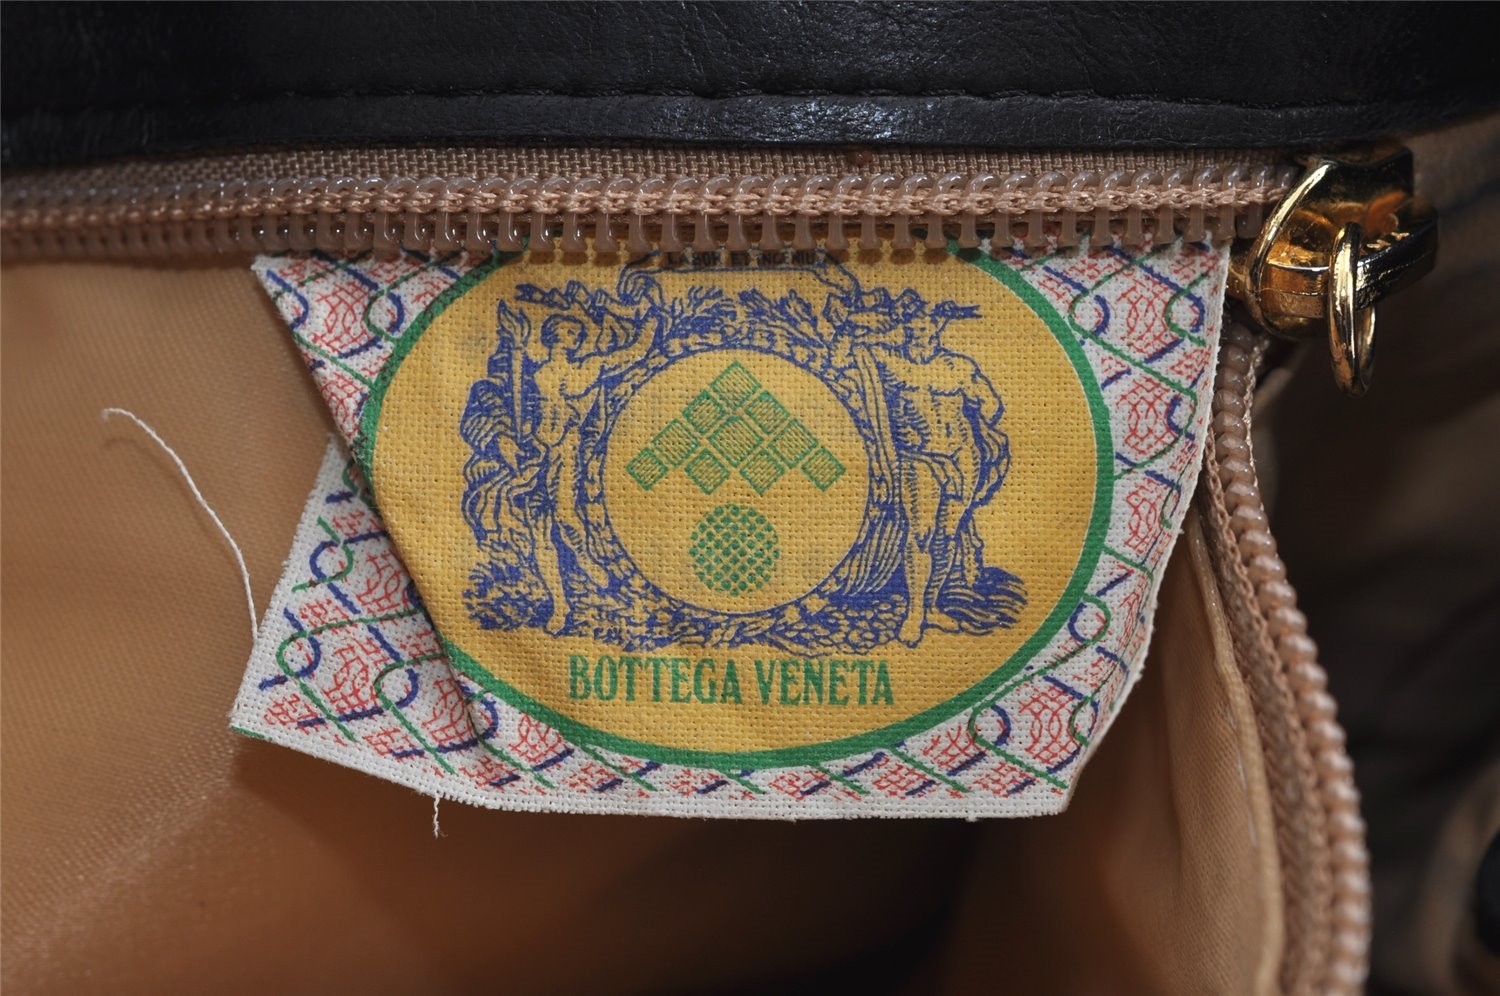 Authentic BOTTEGA VENETA Intrecciato Leather Shoulder Bag Purse Black 2132J